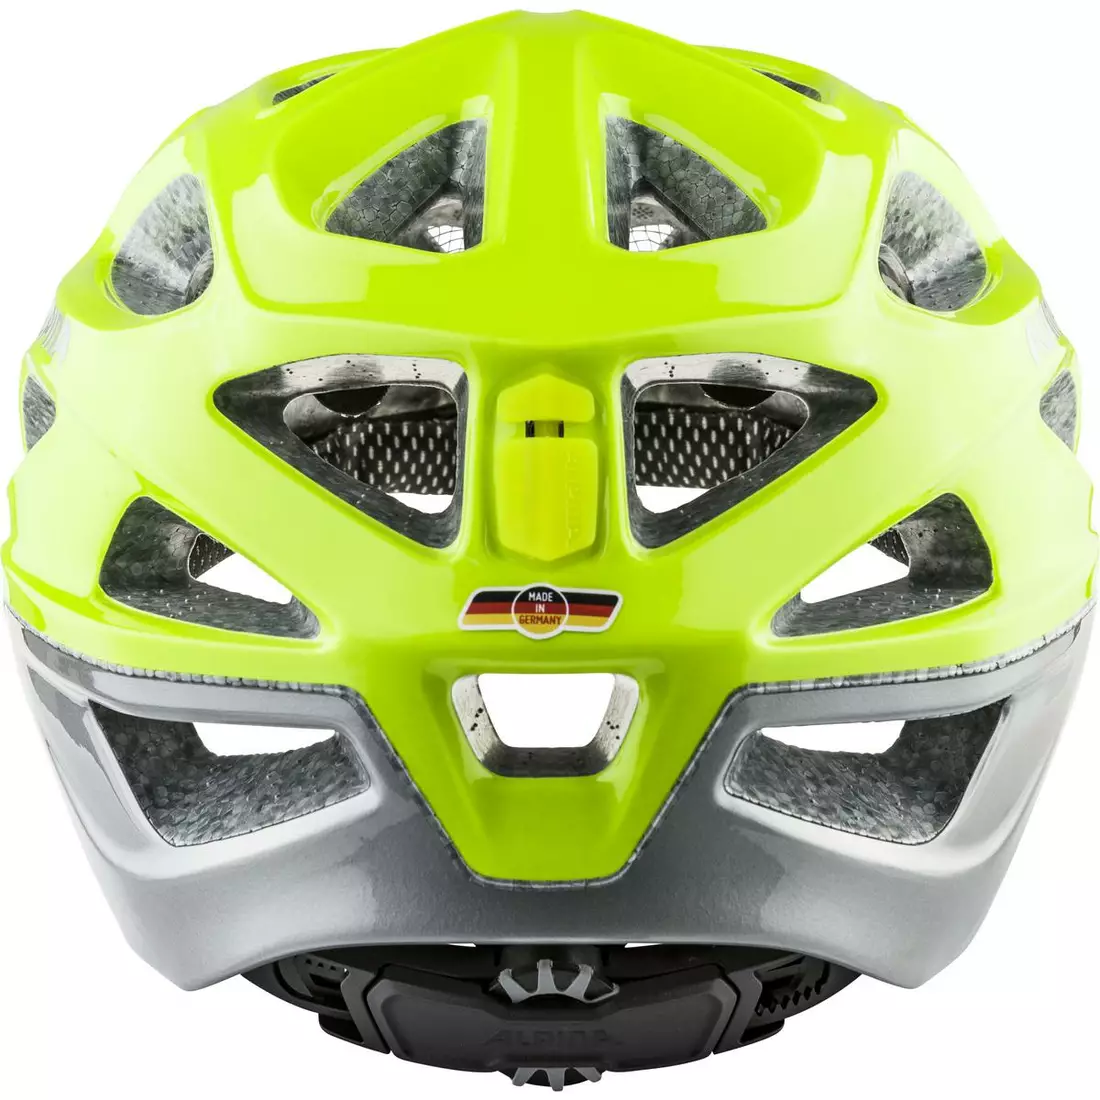 ALPINA MYTHOS 3.0 L.E Bicycle helmet MTB, Visible Silver Gloss